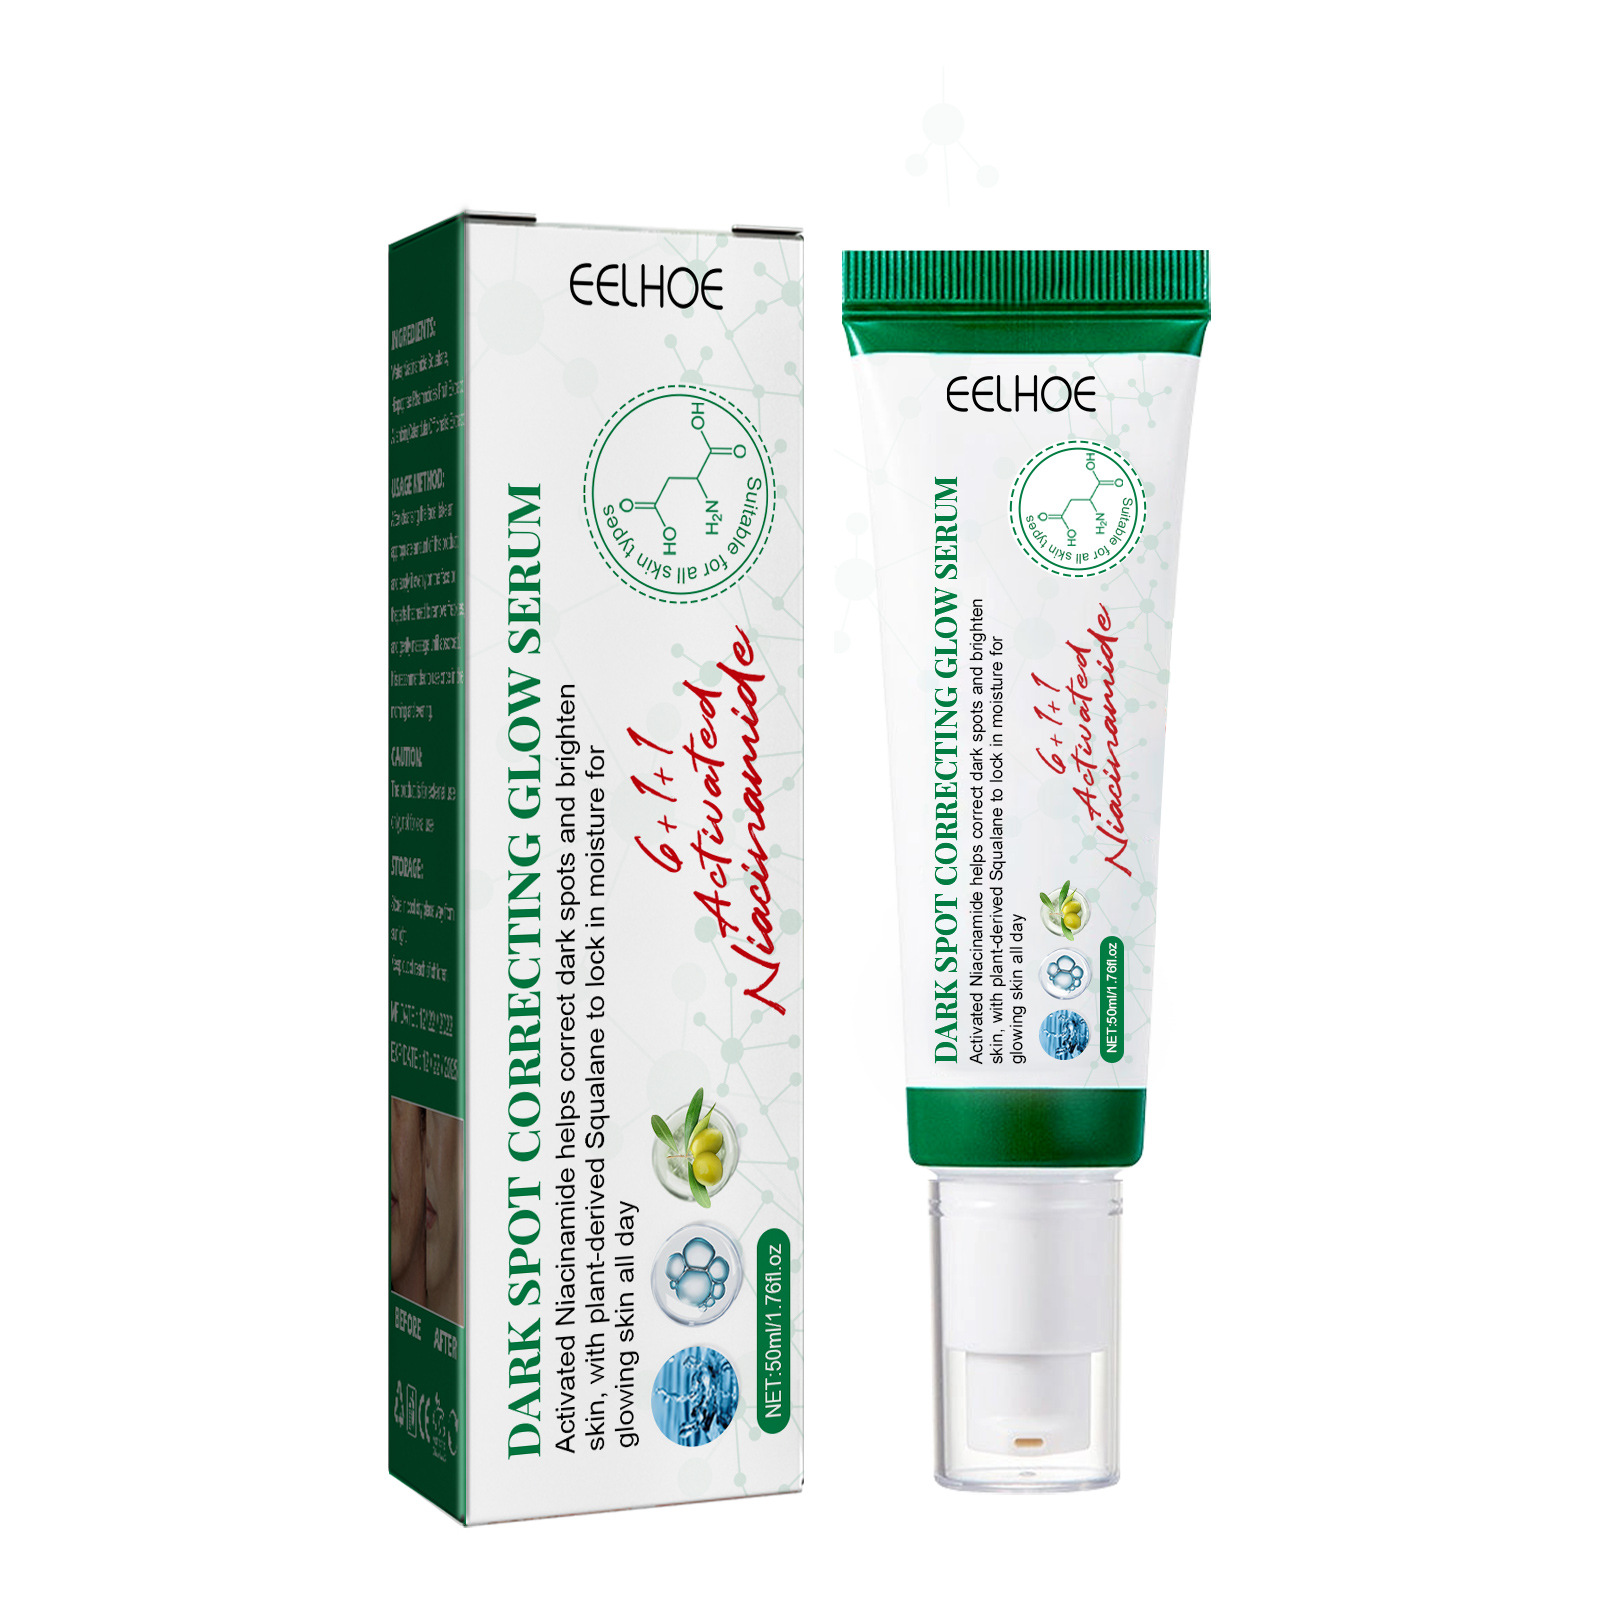 Eelhoe Fade Spots Brightening Essence Skin Care Repair Dark Skin Spots Freckles Melanin Skin Care